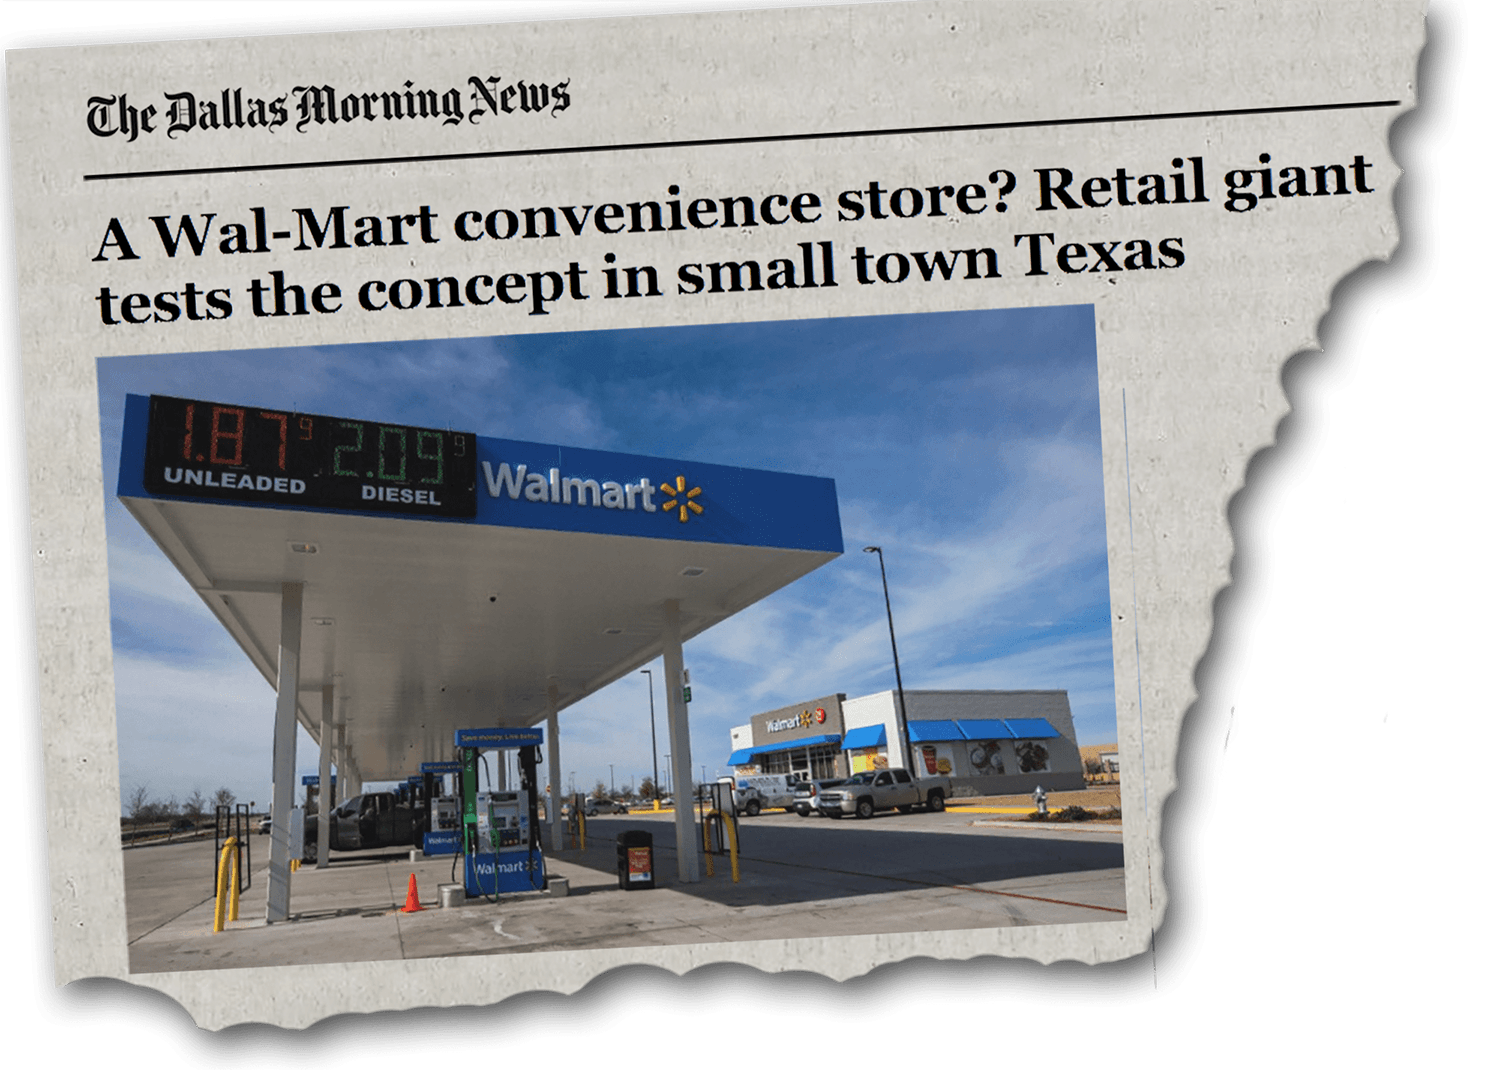 Walmart Convenience store - Allyn Media